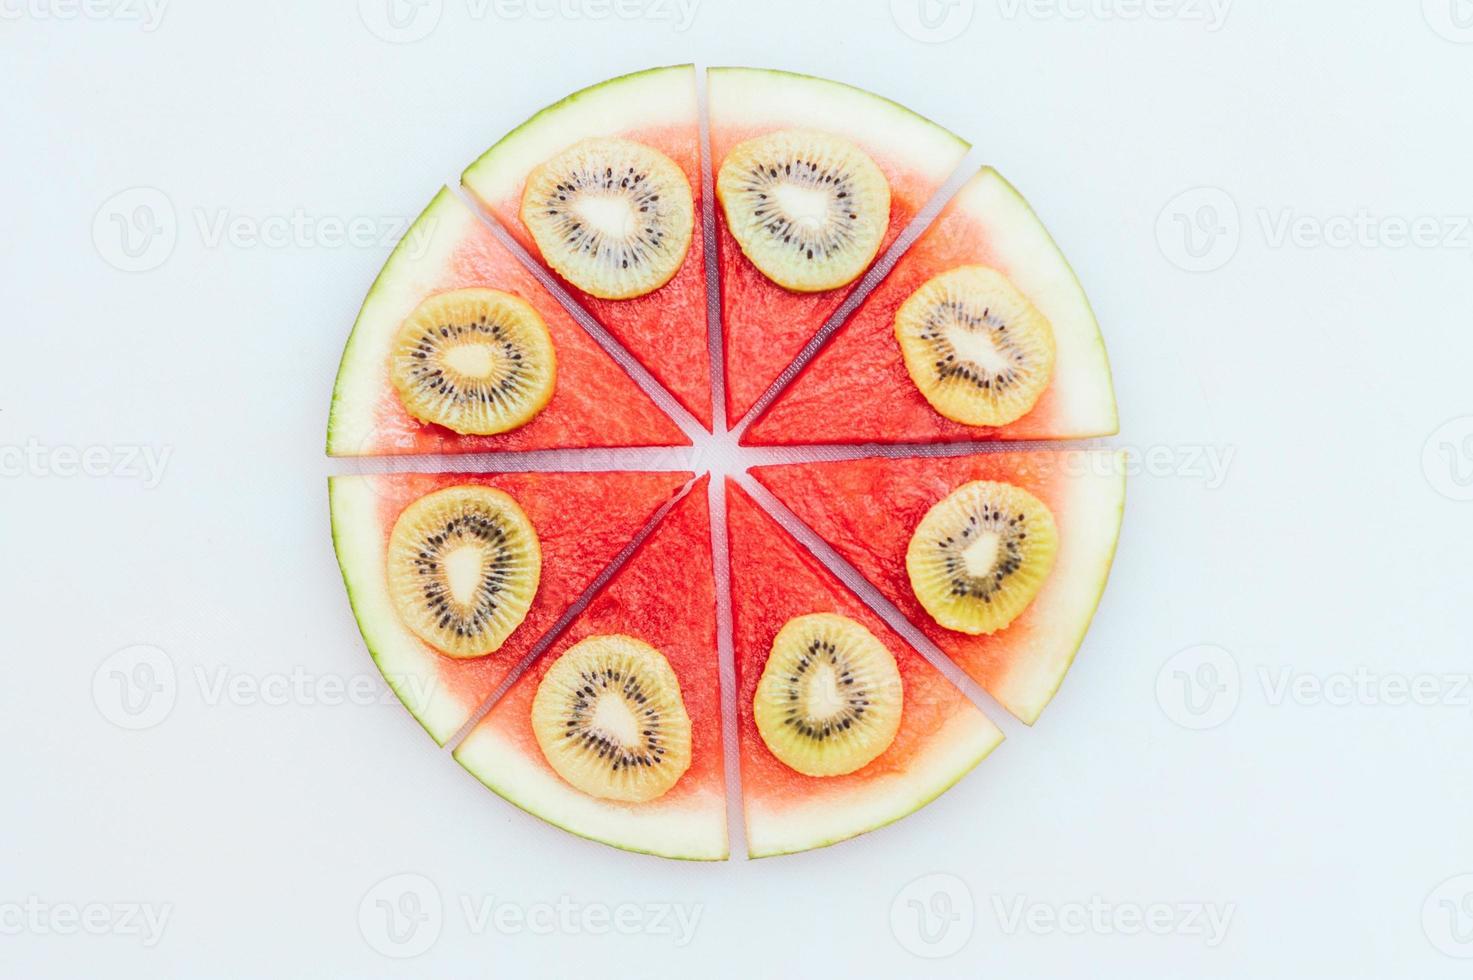 deliciosa sobremesa de verão. pizza de melancia com fatias de kiwi isoladas sobre fundo branco. conceito de arte de comida. lanche doce. prato de frutas frescas da época foto